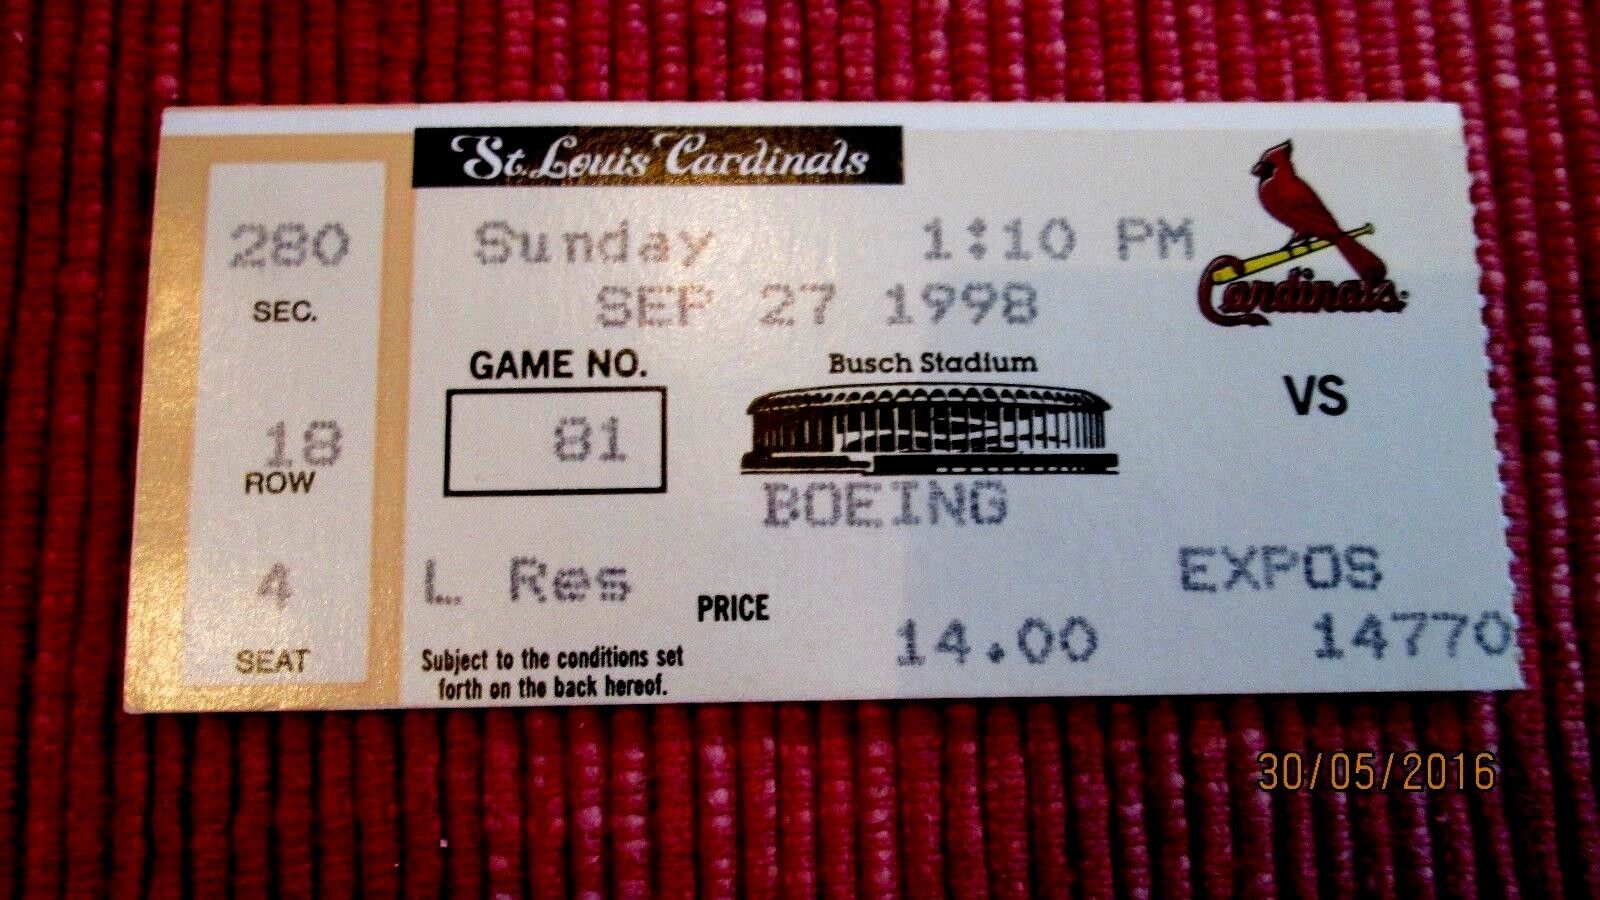 MARK McGWIRE 70 Home Run 3 1/2 inch 9/27/1998 (Cards) Baseball Ticket stub -Mint